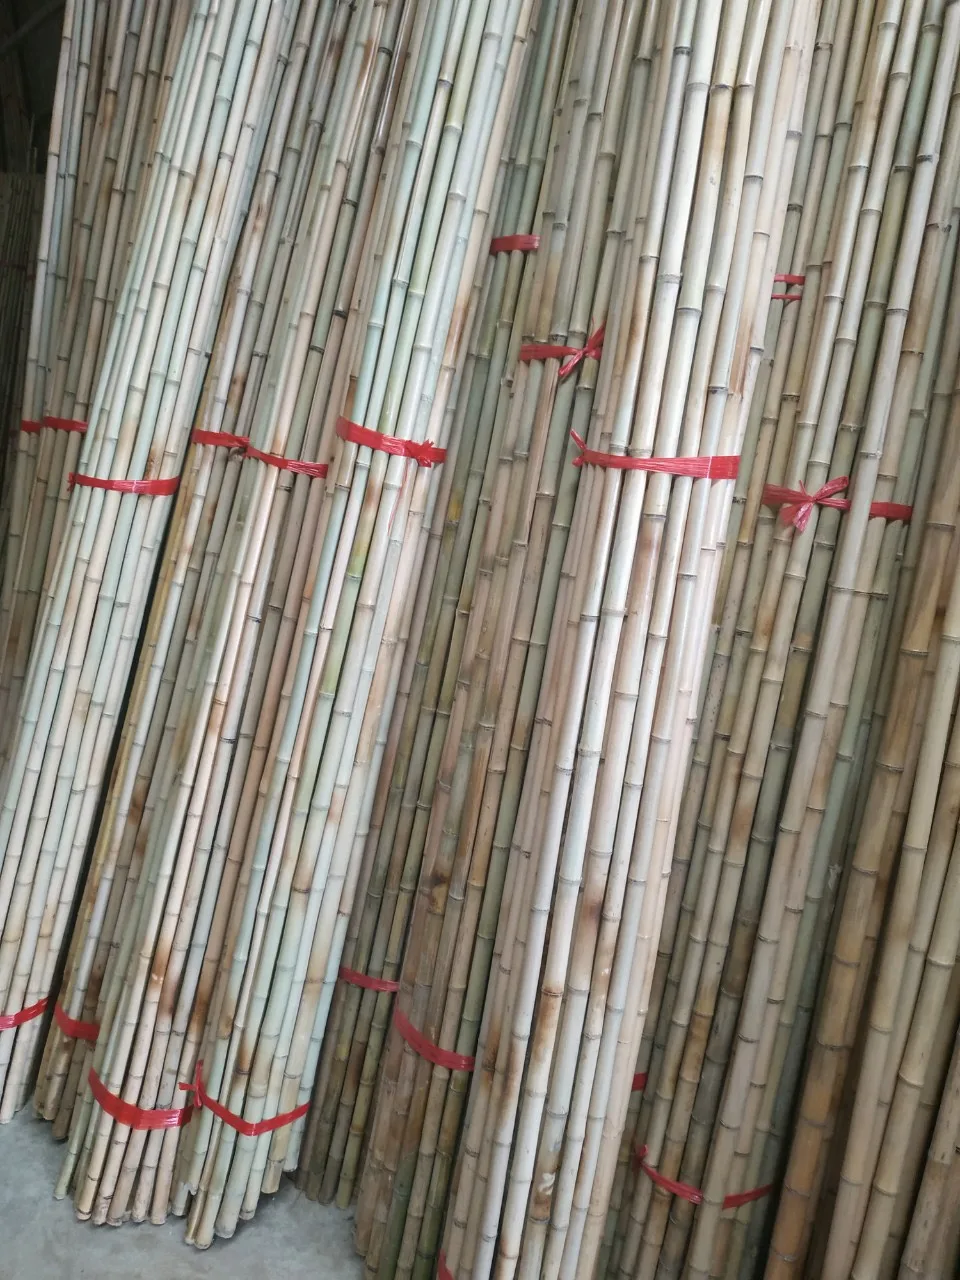 
Raw Bamboo Poles - Kiddo (+84905010988) 